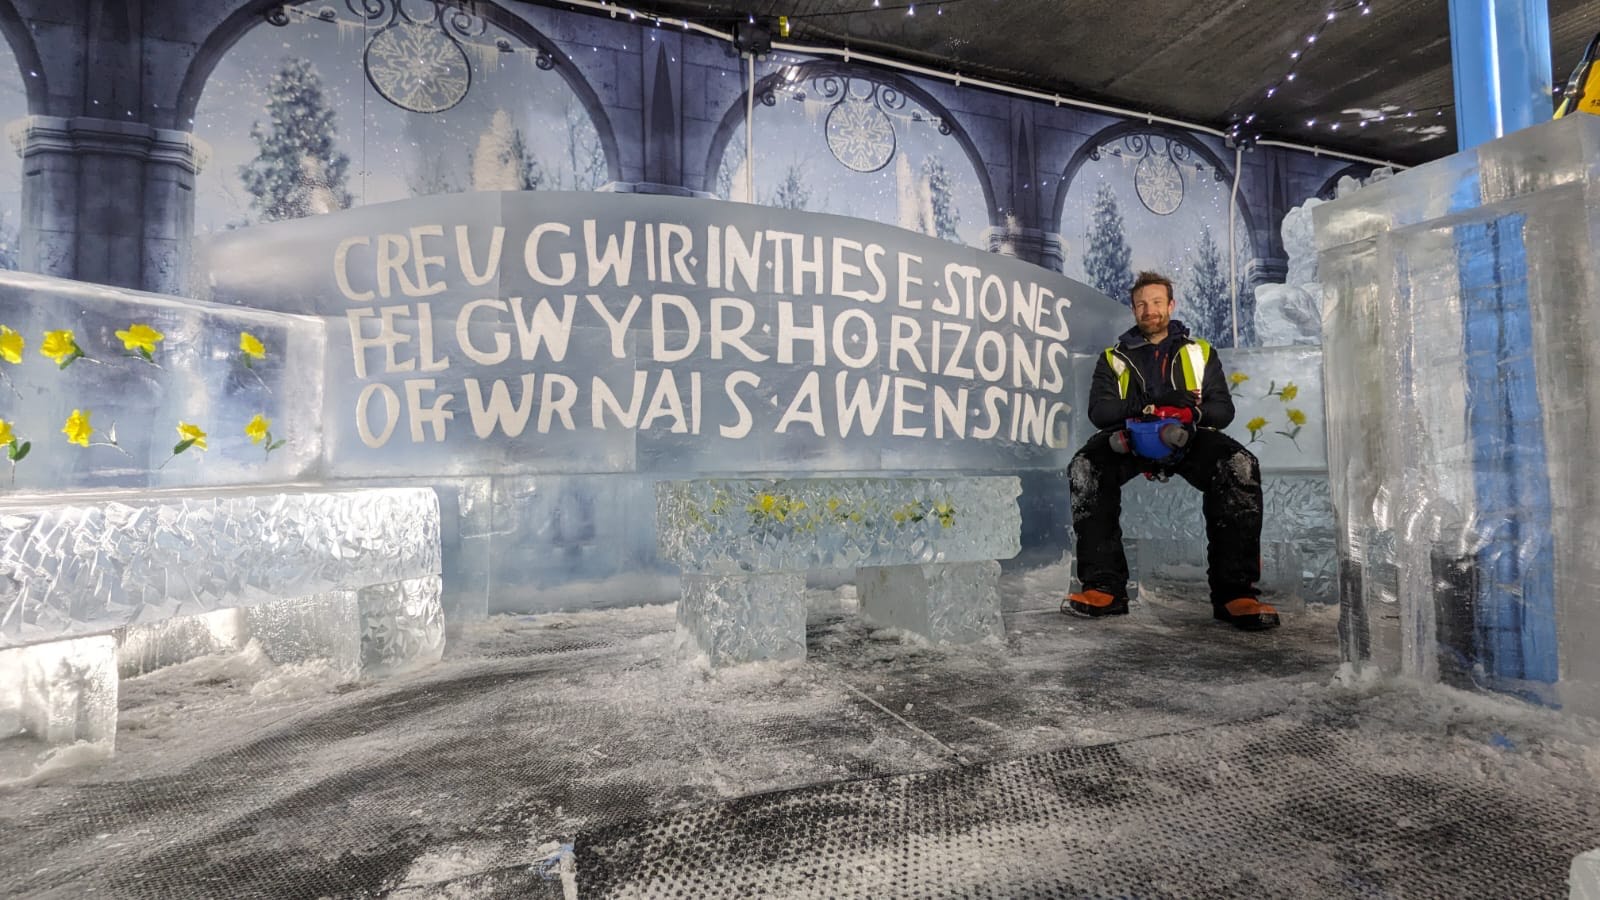 A Welsh Winter Wonderland in Cardiff